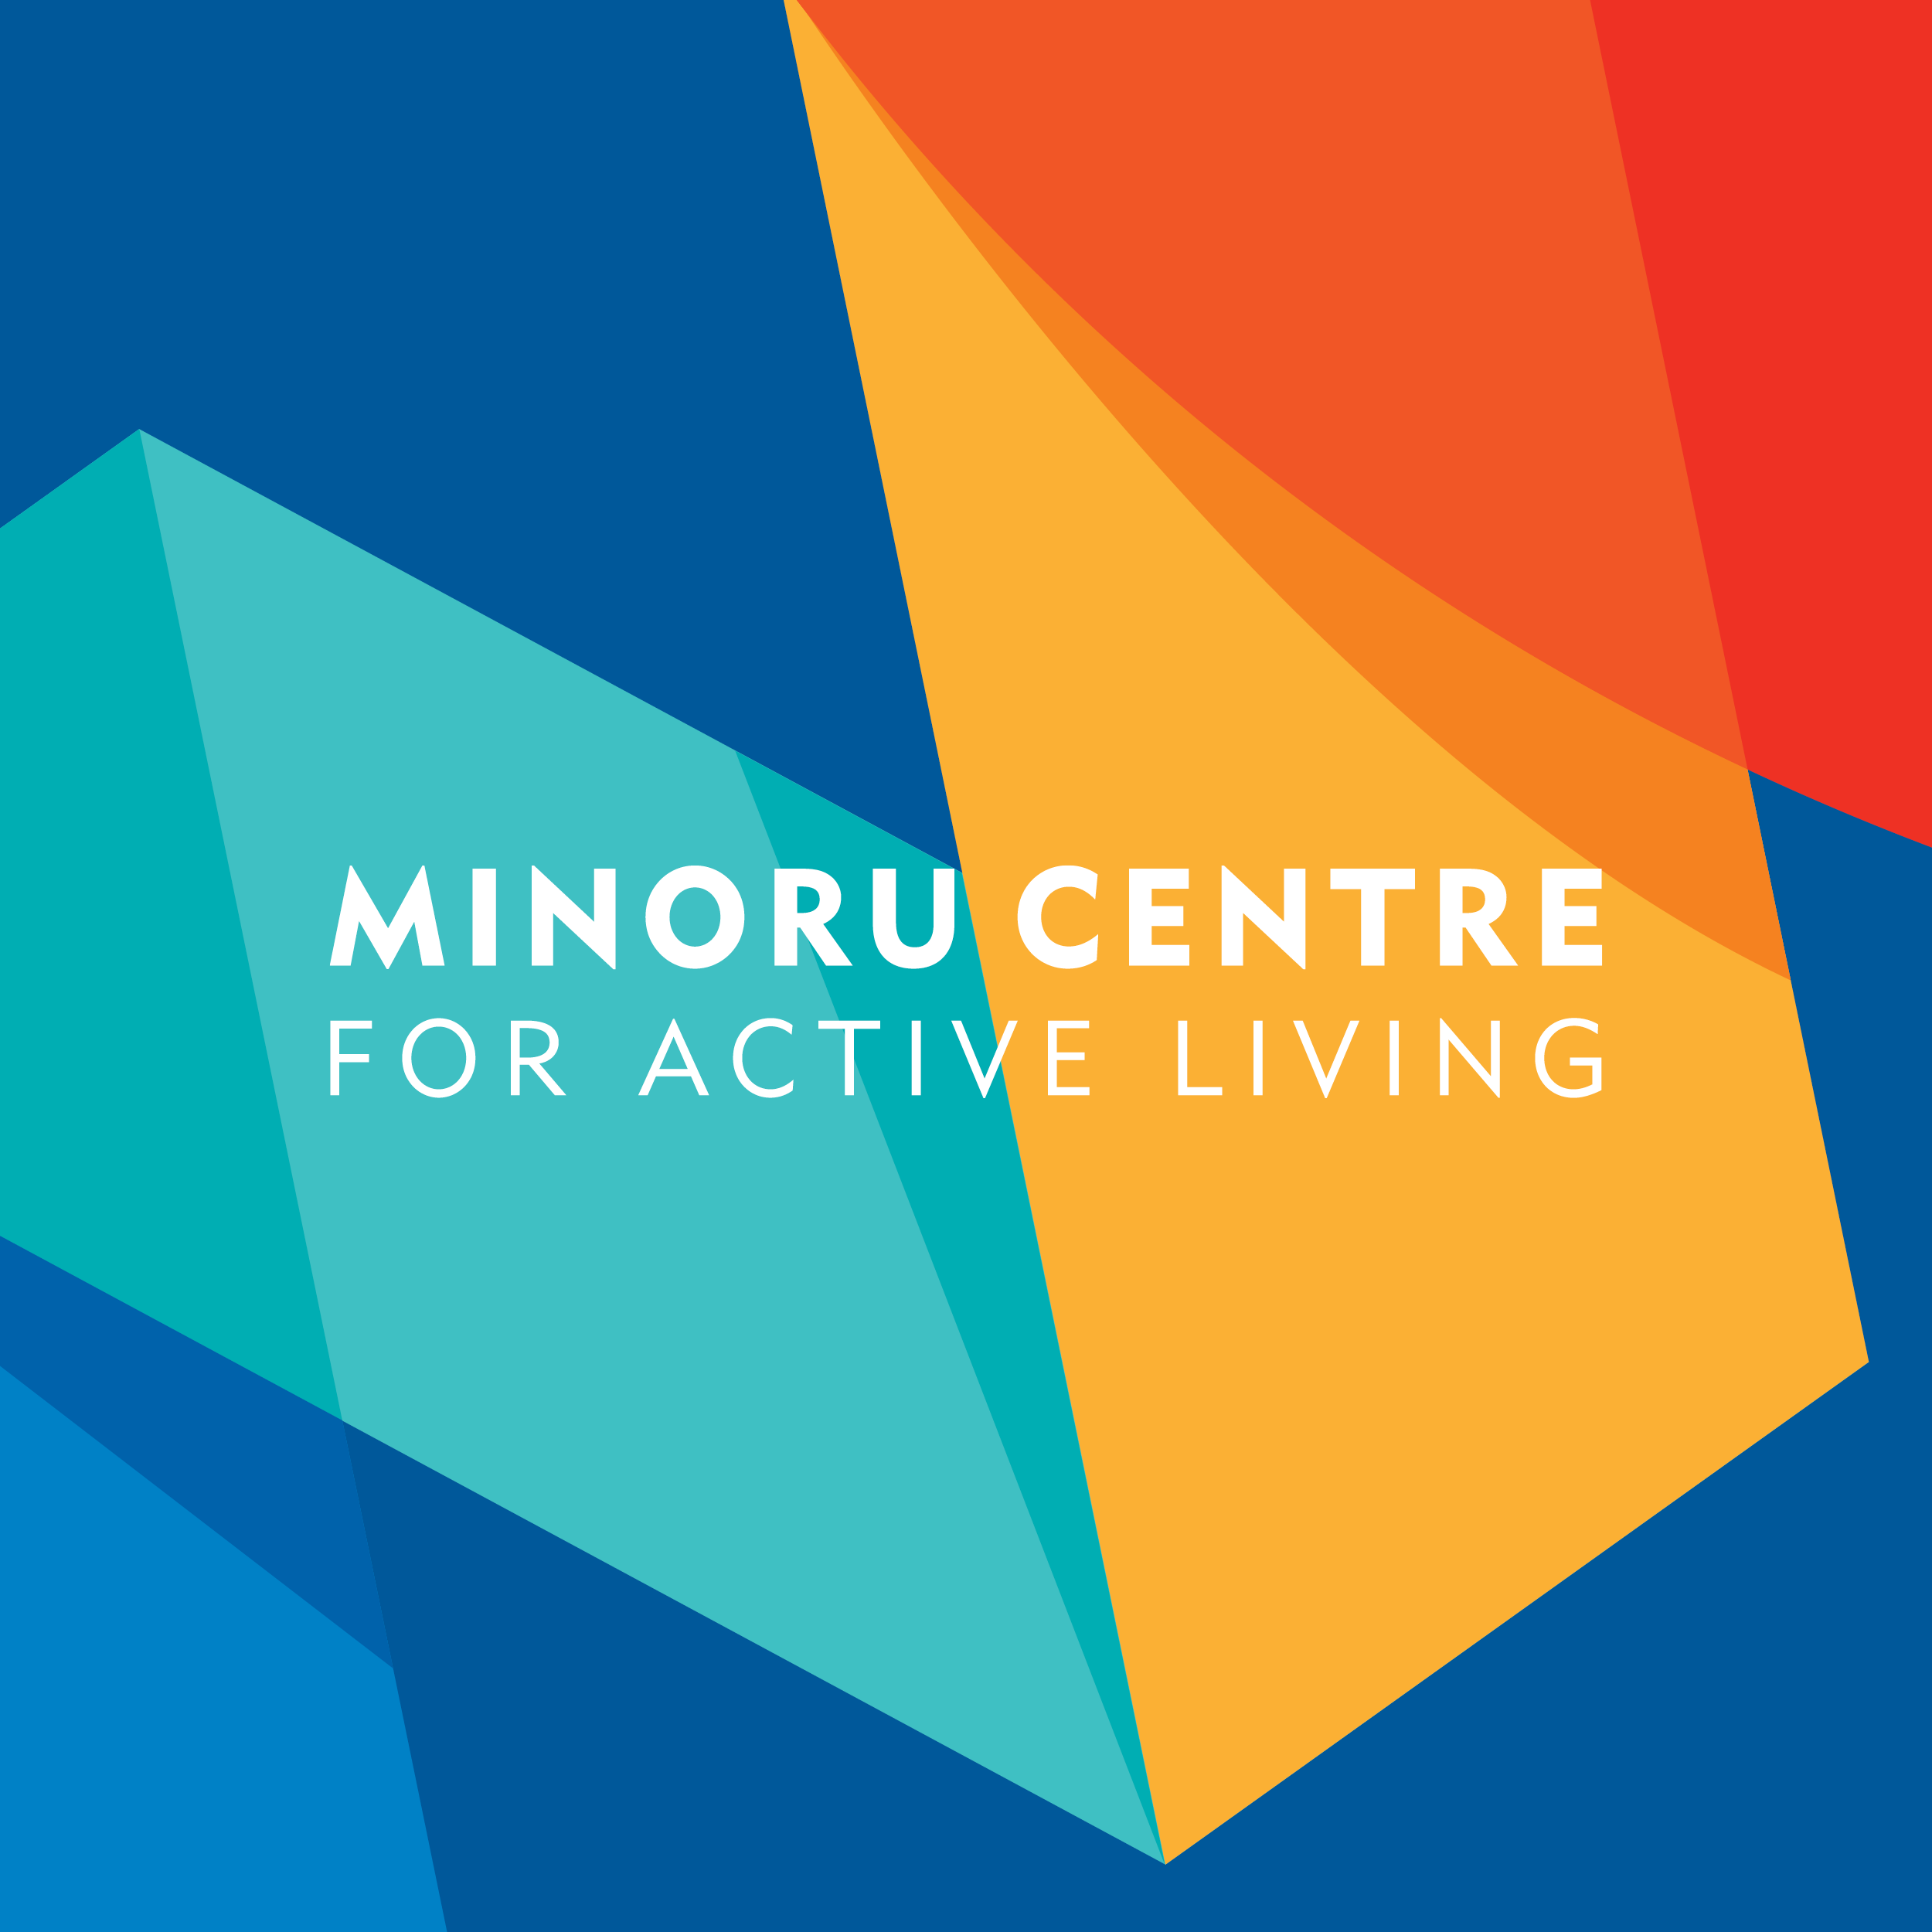 Minoru Centre for Active Living